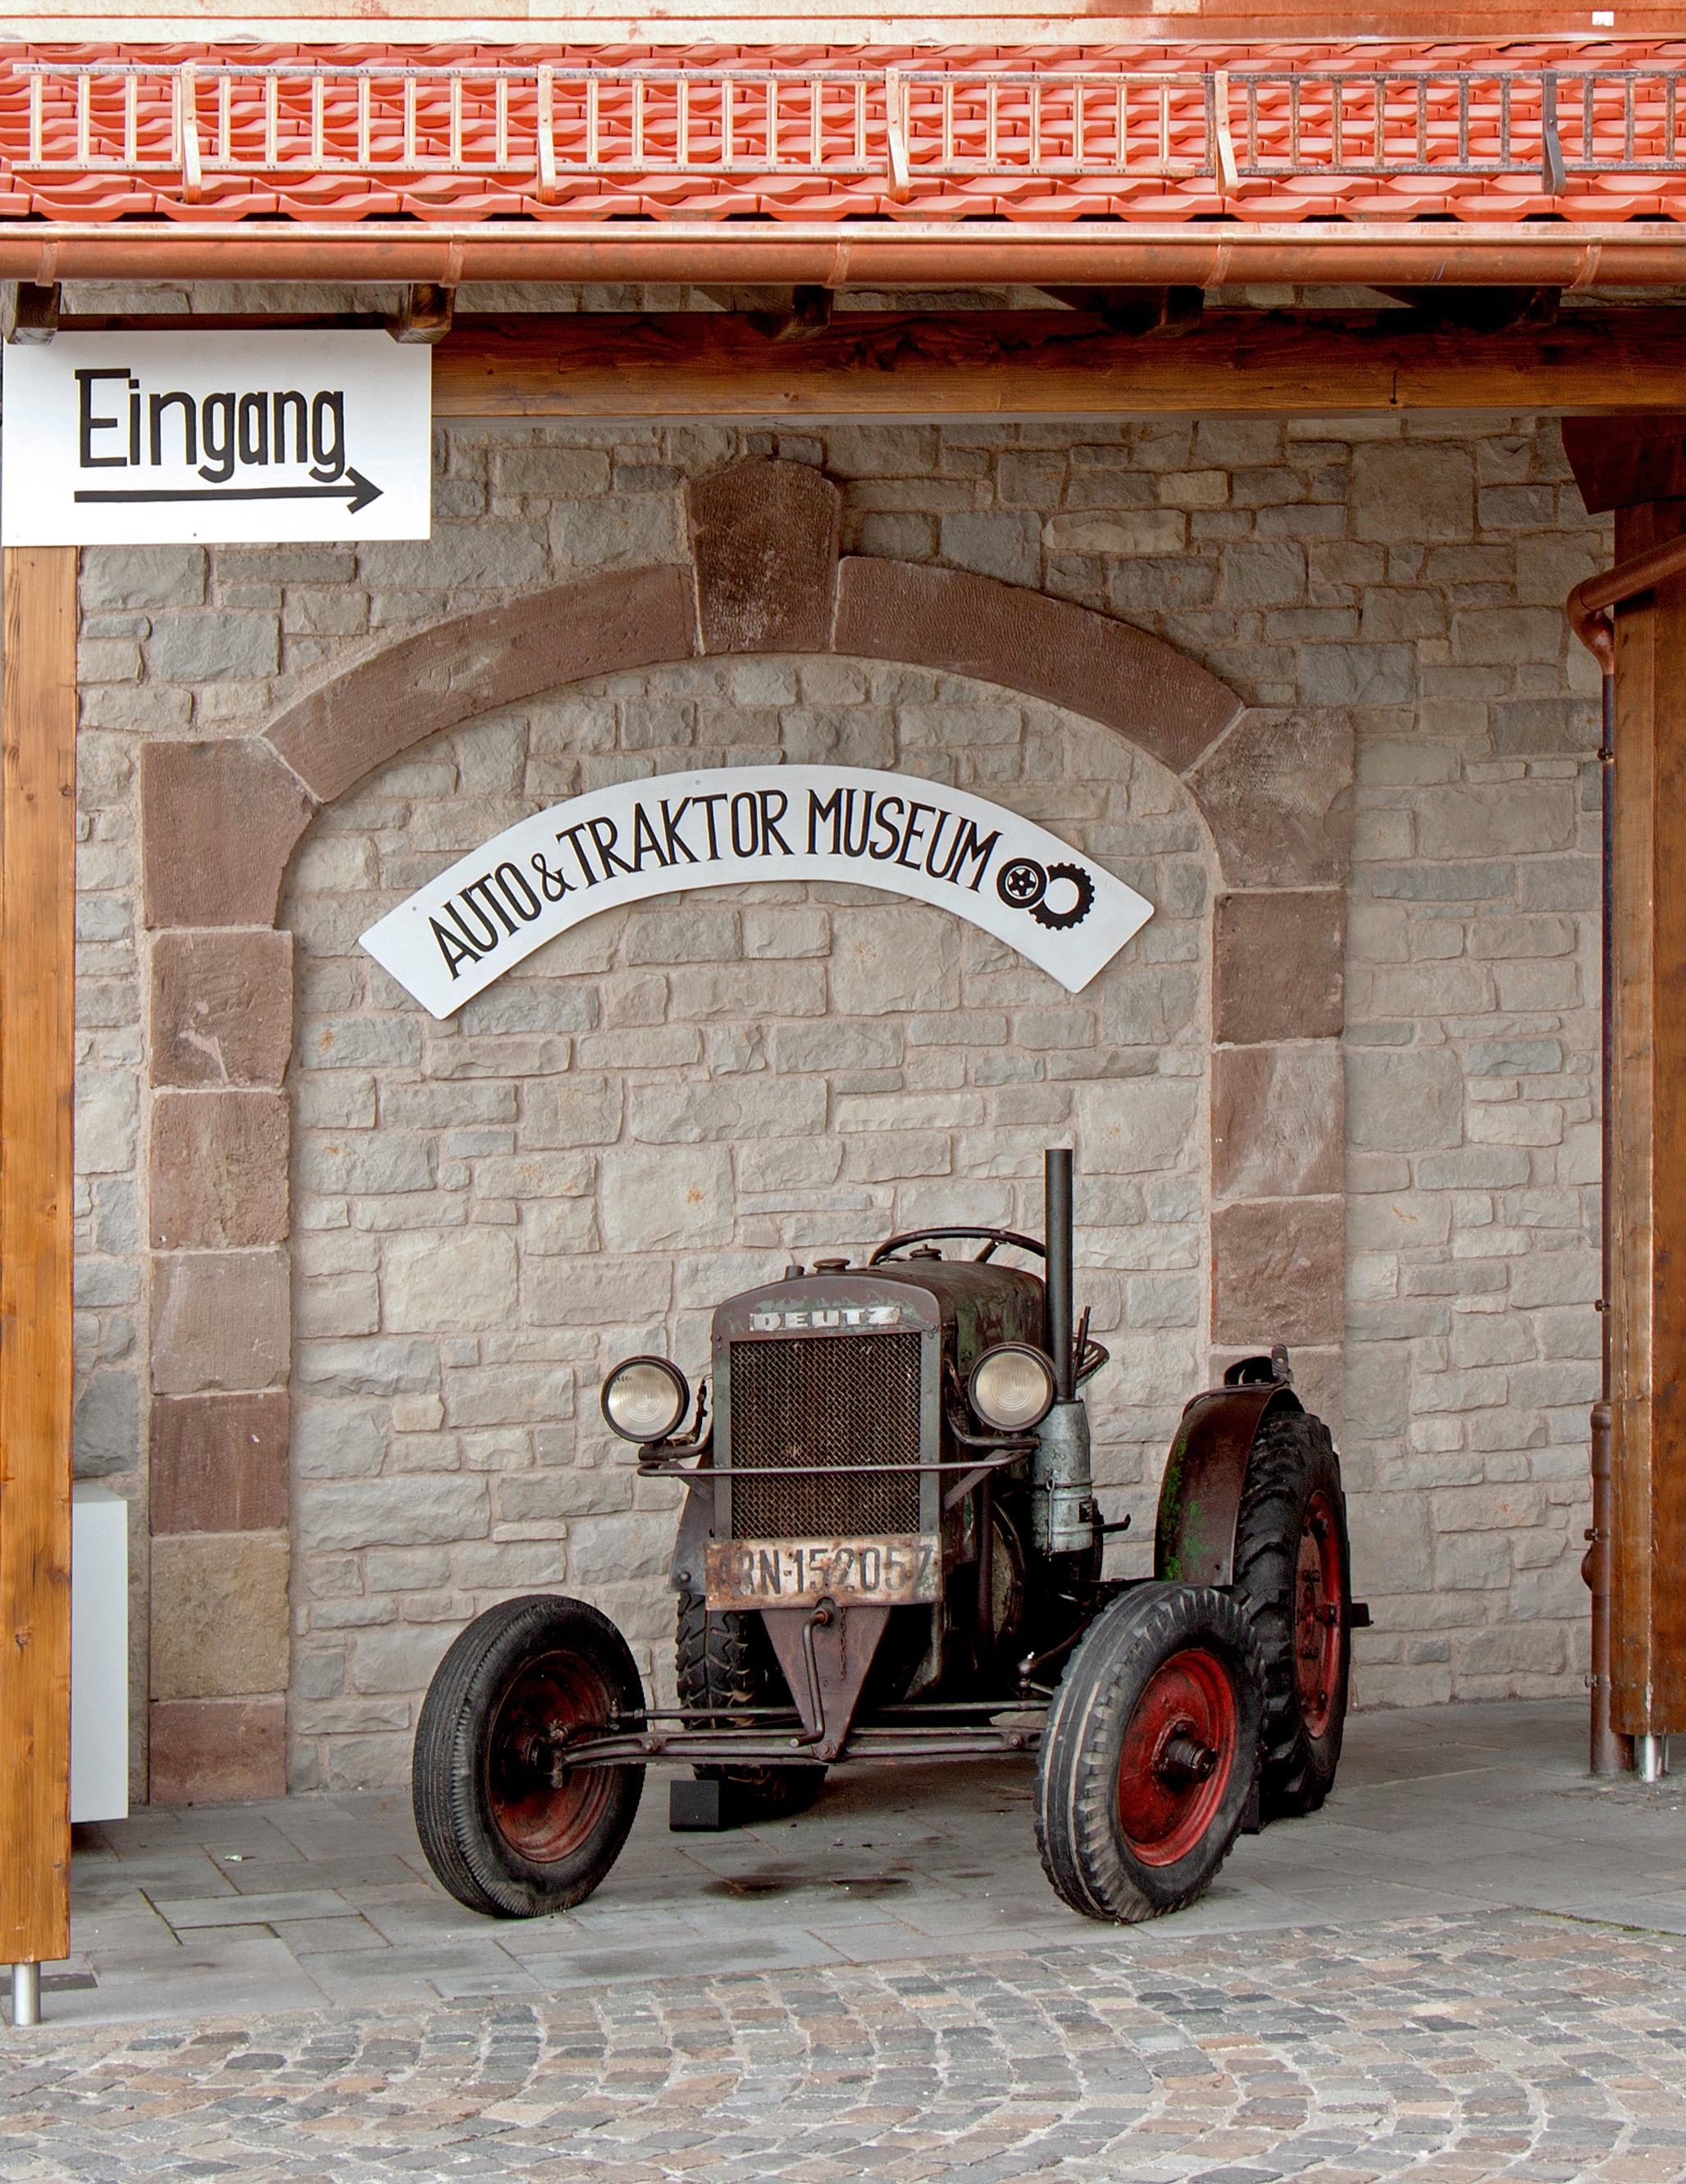 Traktormuseum_Bodensee_-_Entrance_area